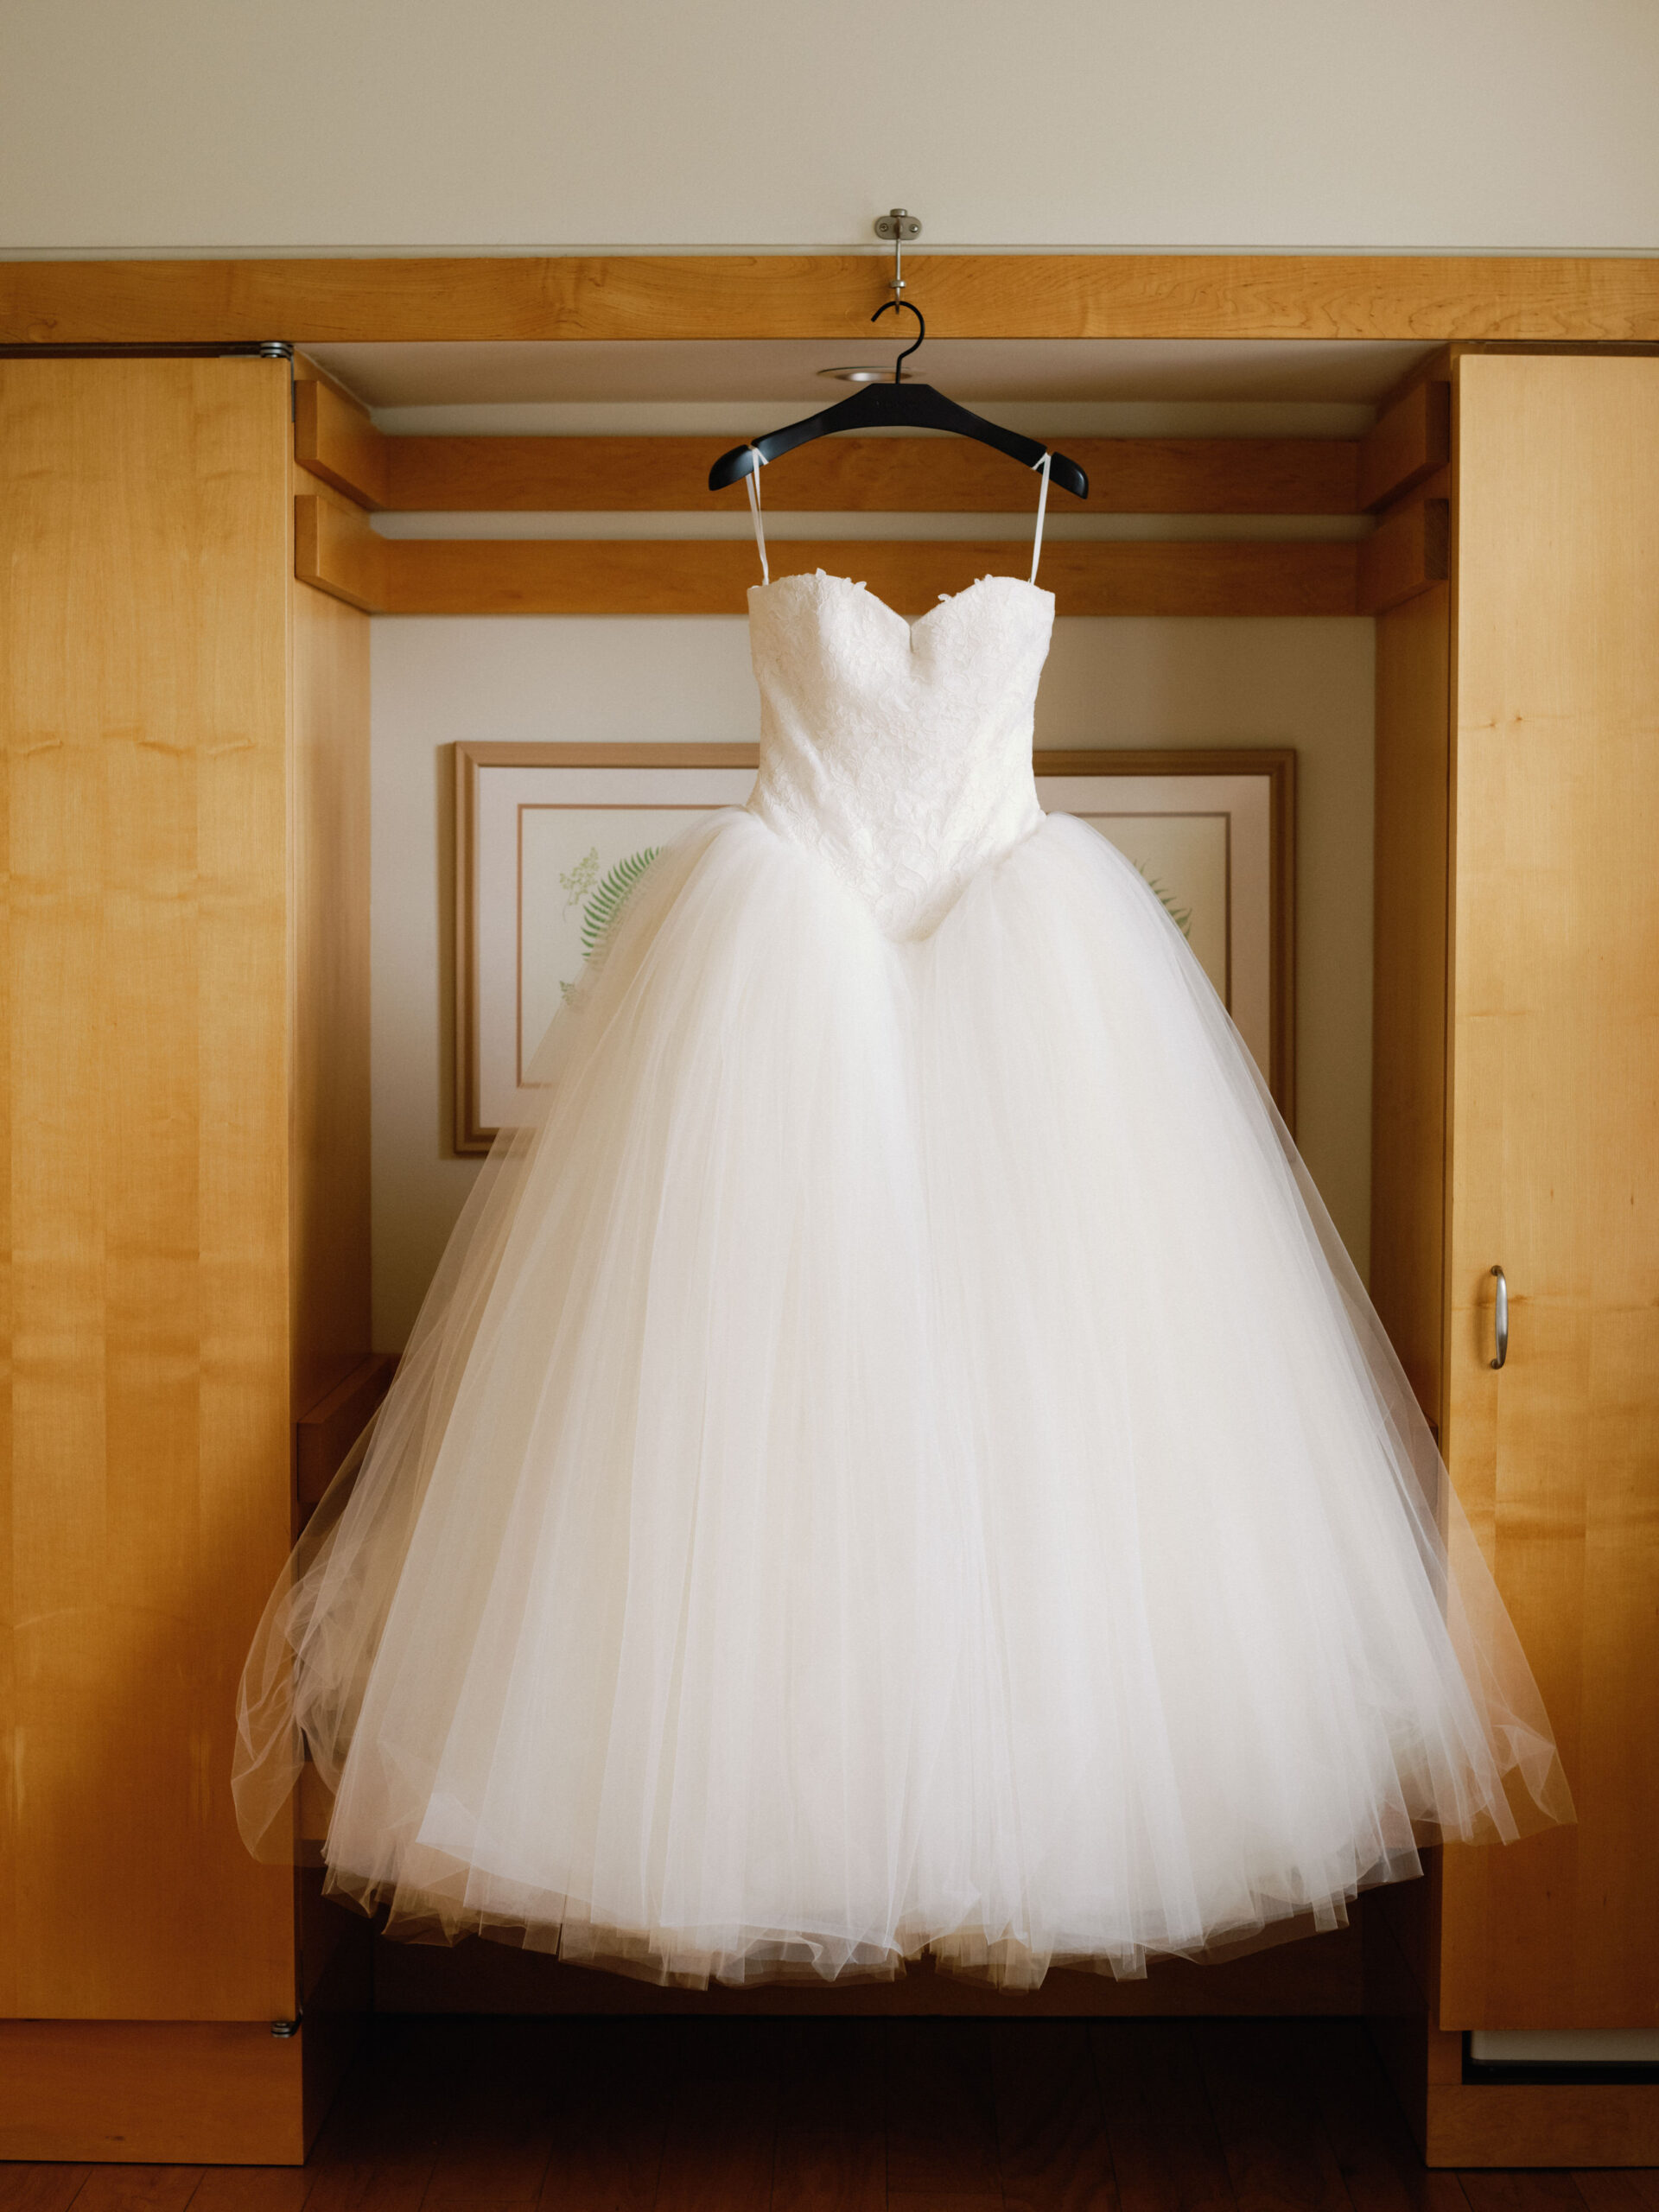 The bride's wedding dress. Wedding Personal style image by Jenny Fu Studio